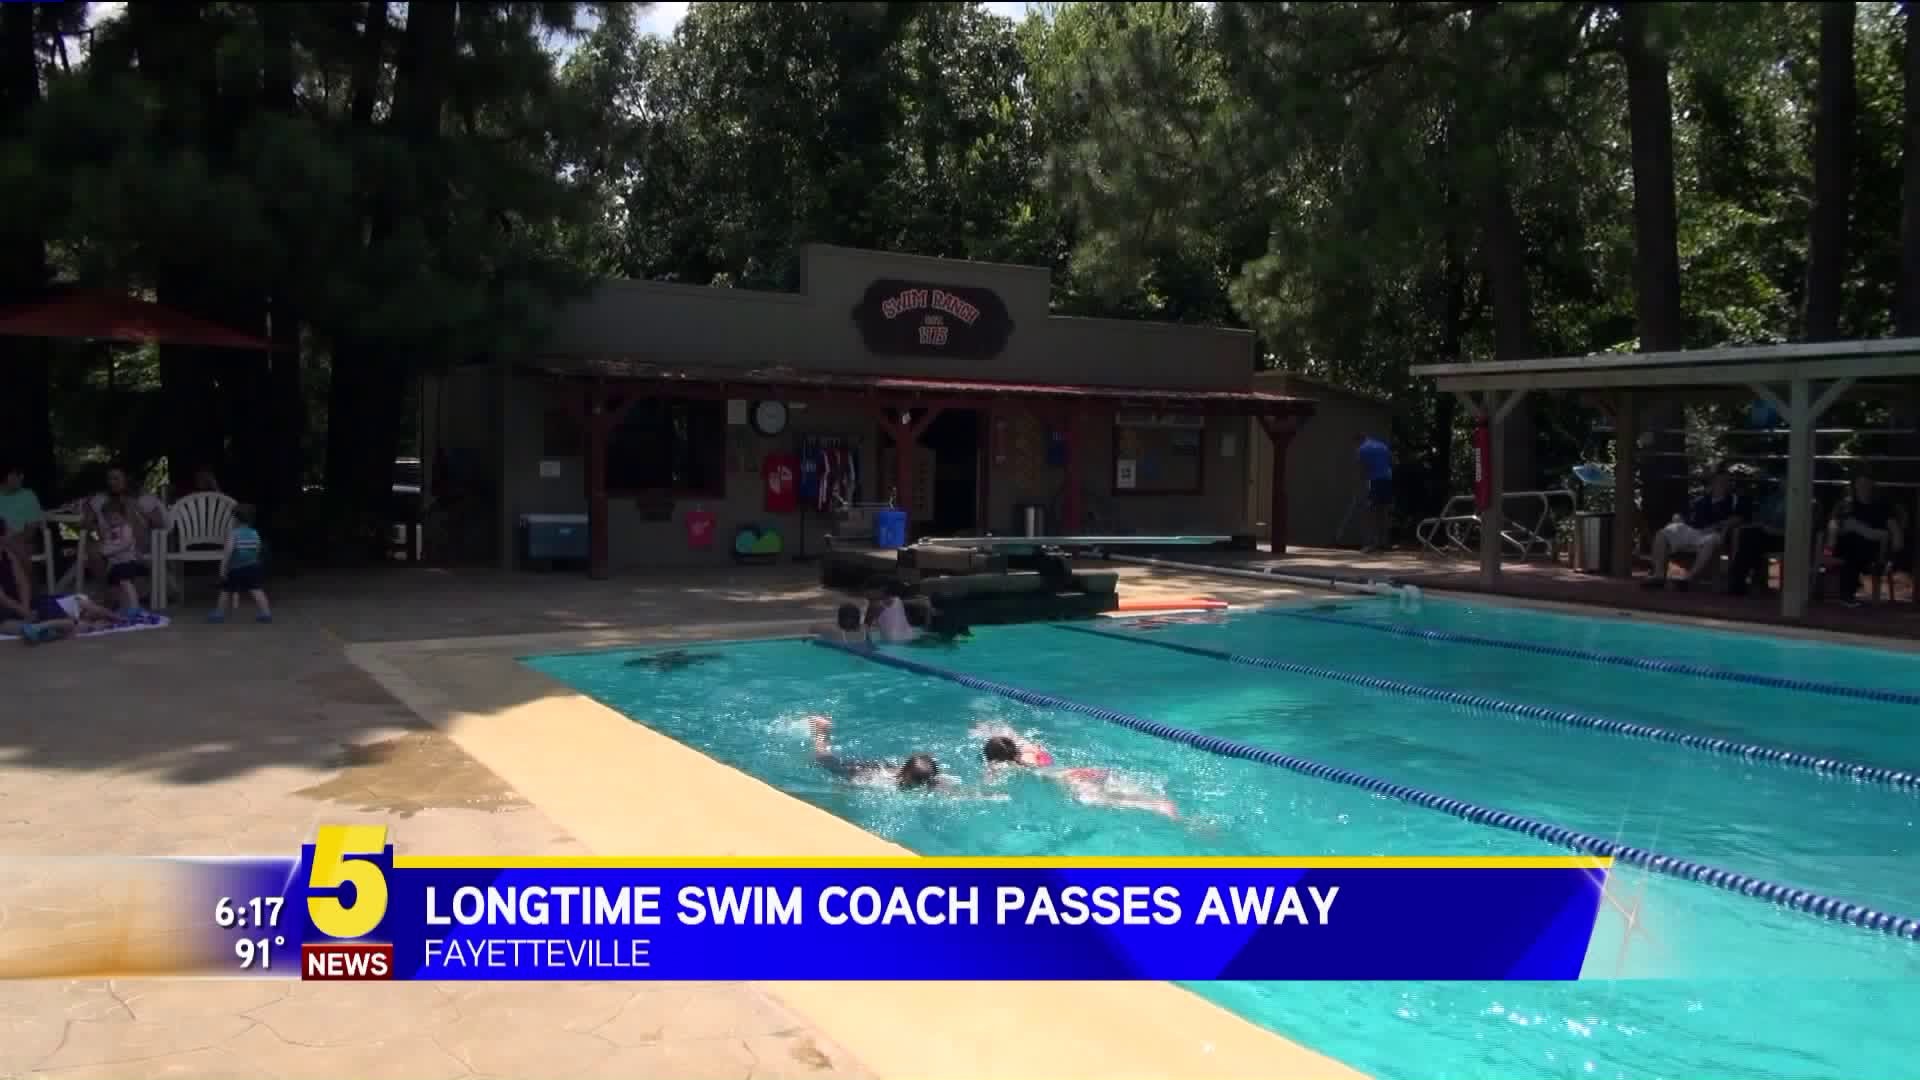 Longtime Swim Coach Passes Away